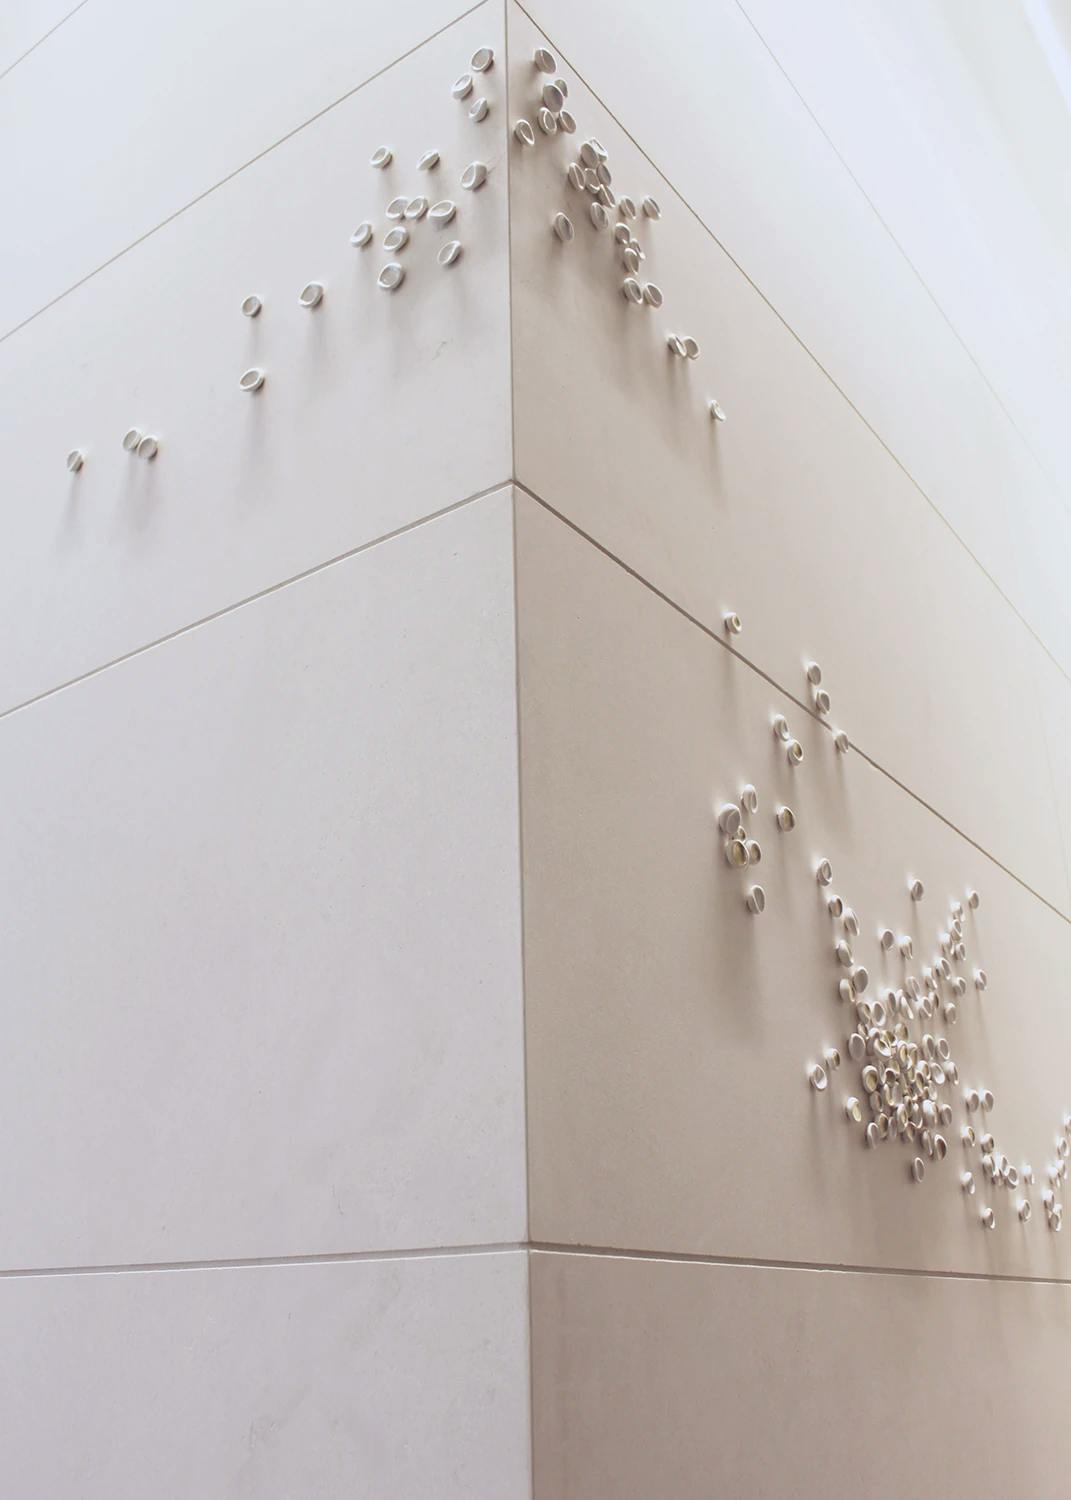 White porcelain installation on a white wall by artist Christina Watka. 